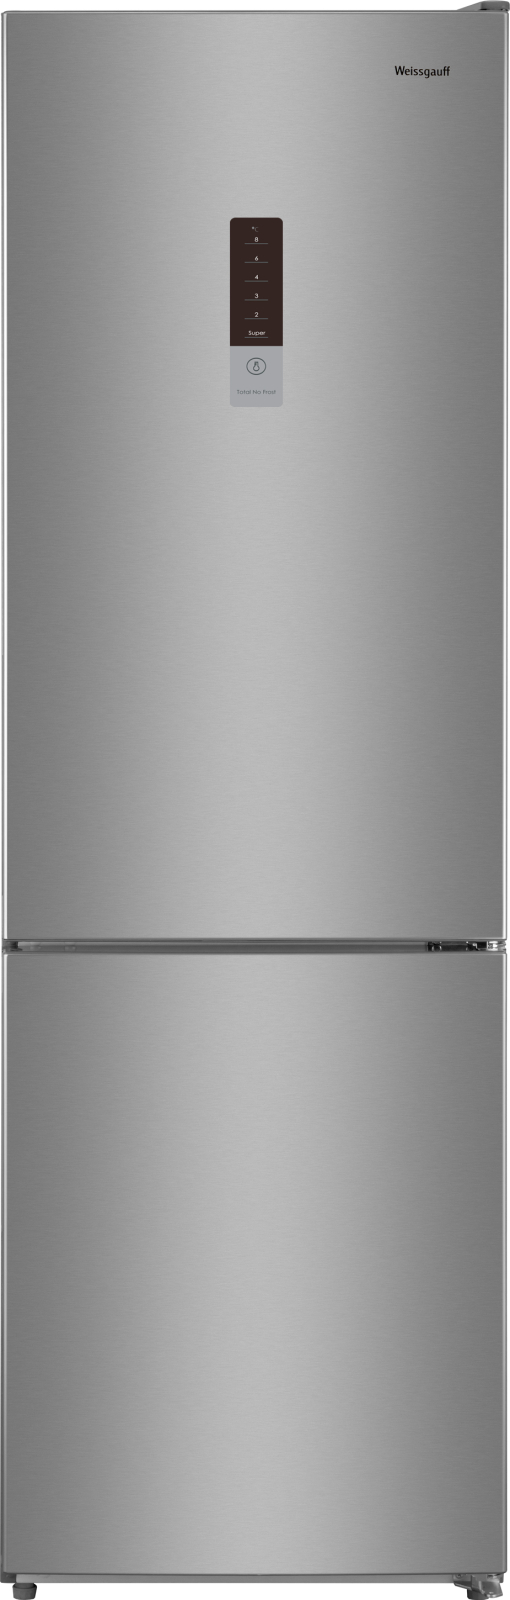 Холодильник Weissgauff WRK 190 DX серебристый холодильник liebherr srsfe 5220 20 001 серебристый